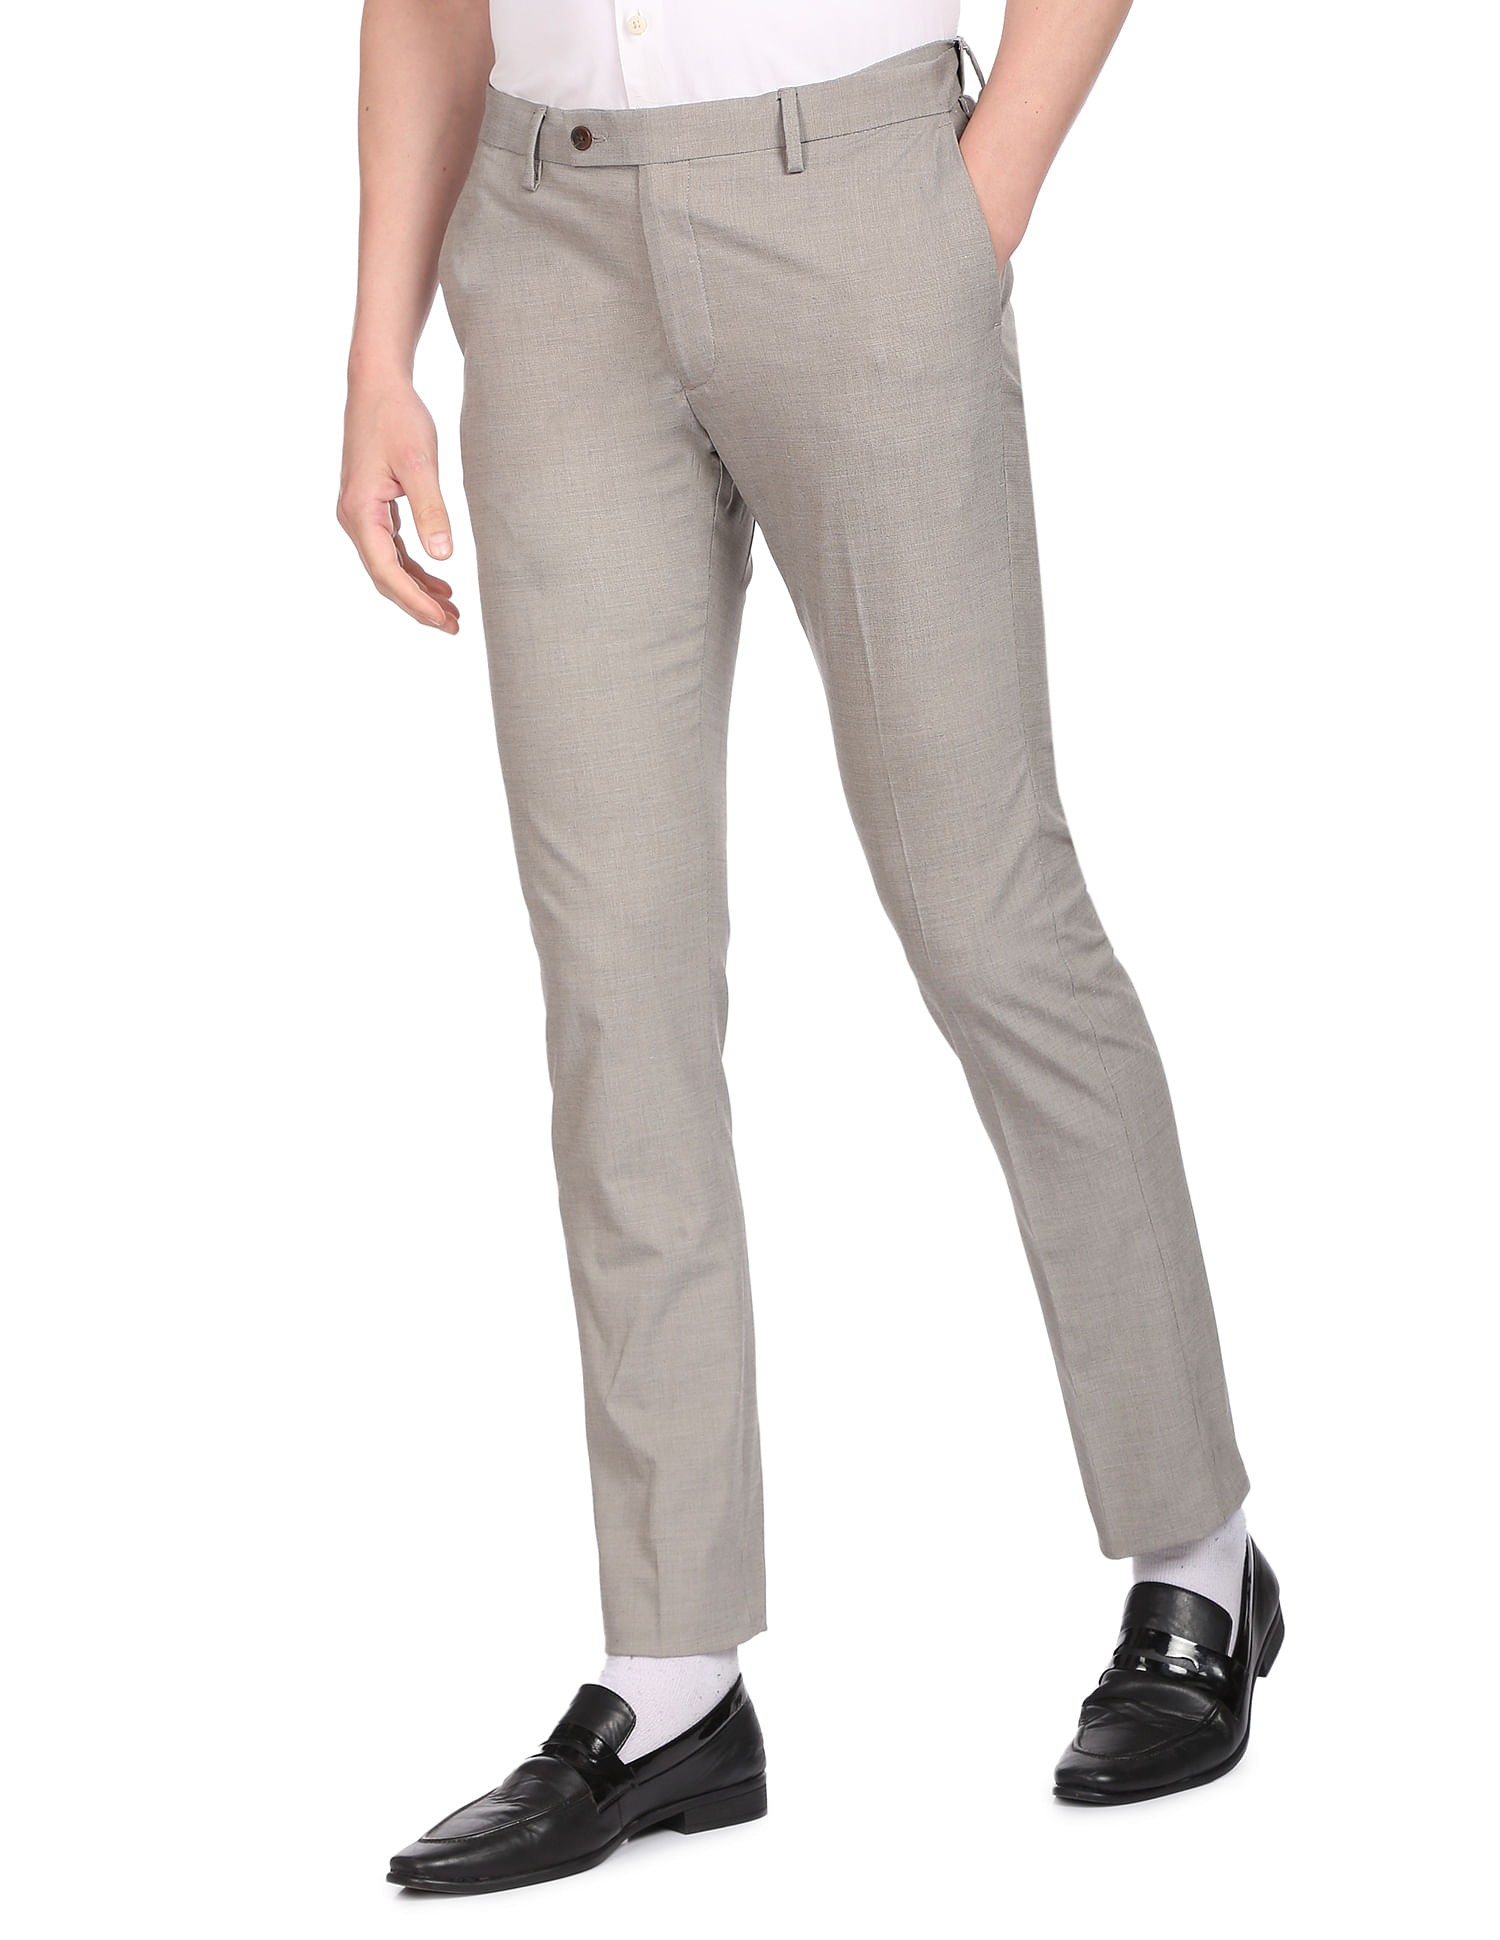 Buy VILLAIN Mens Formal Trousers  Slim Fit Formal Pants  Navy Blue  Online at Best Prices in India  JioMart